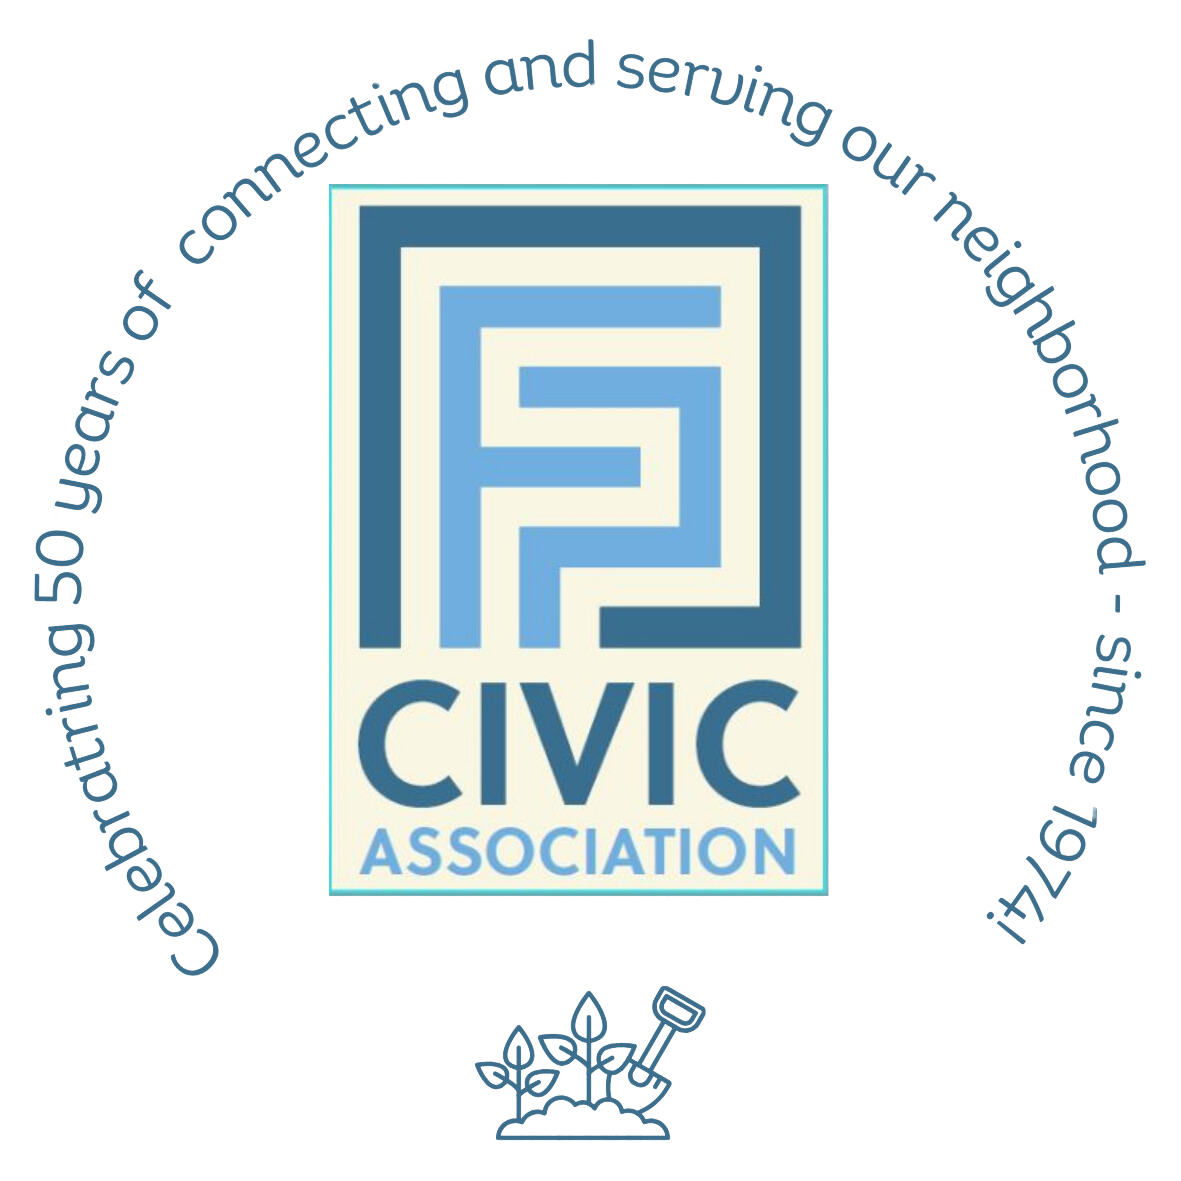 Franklin Park Civic Association